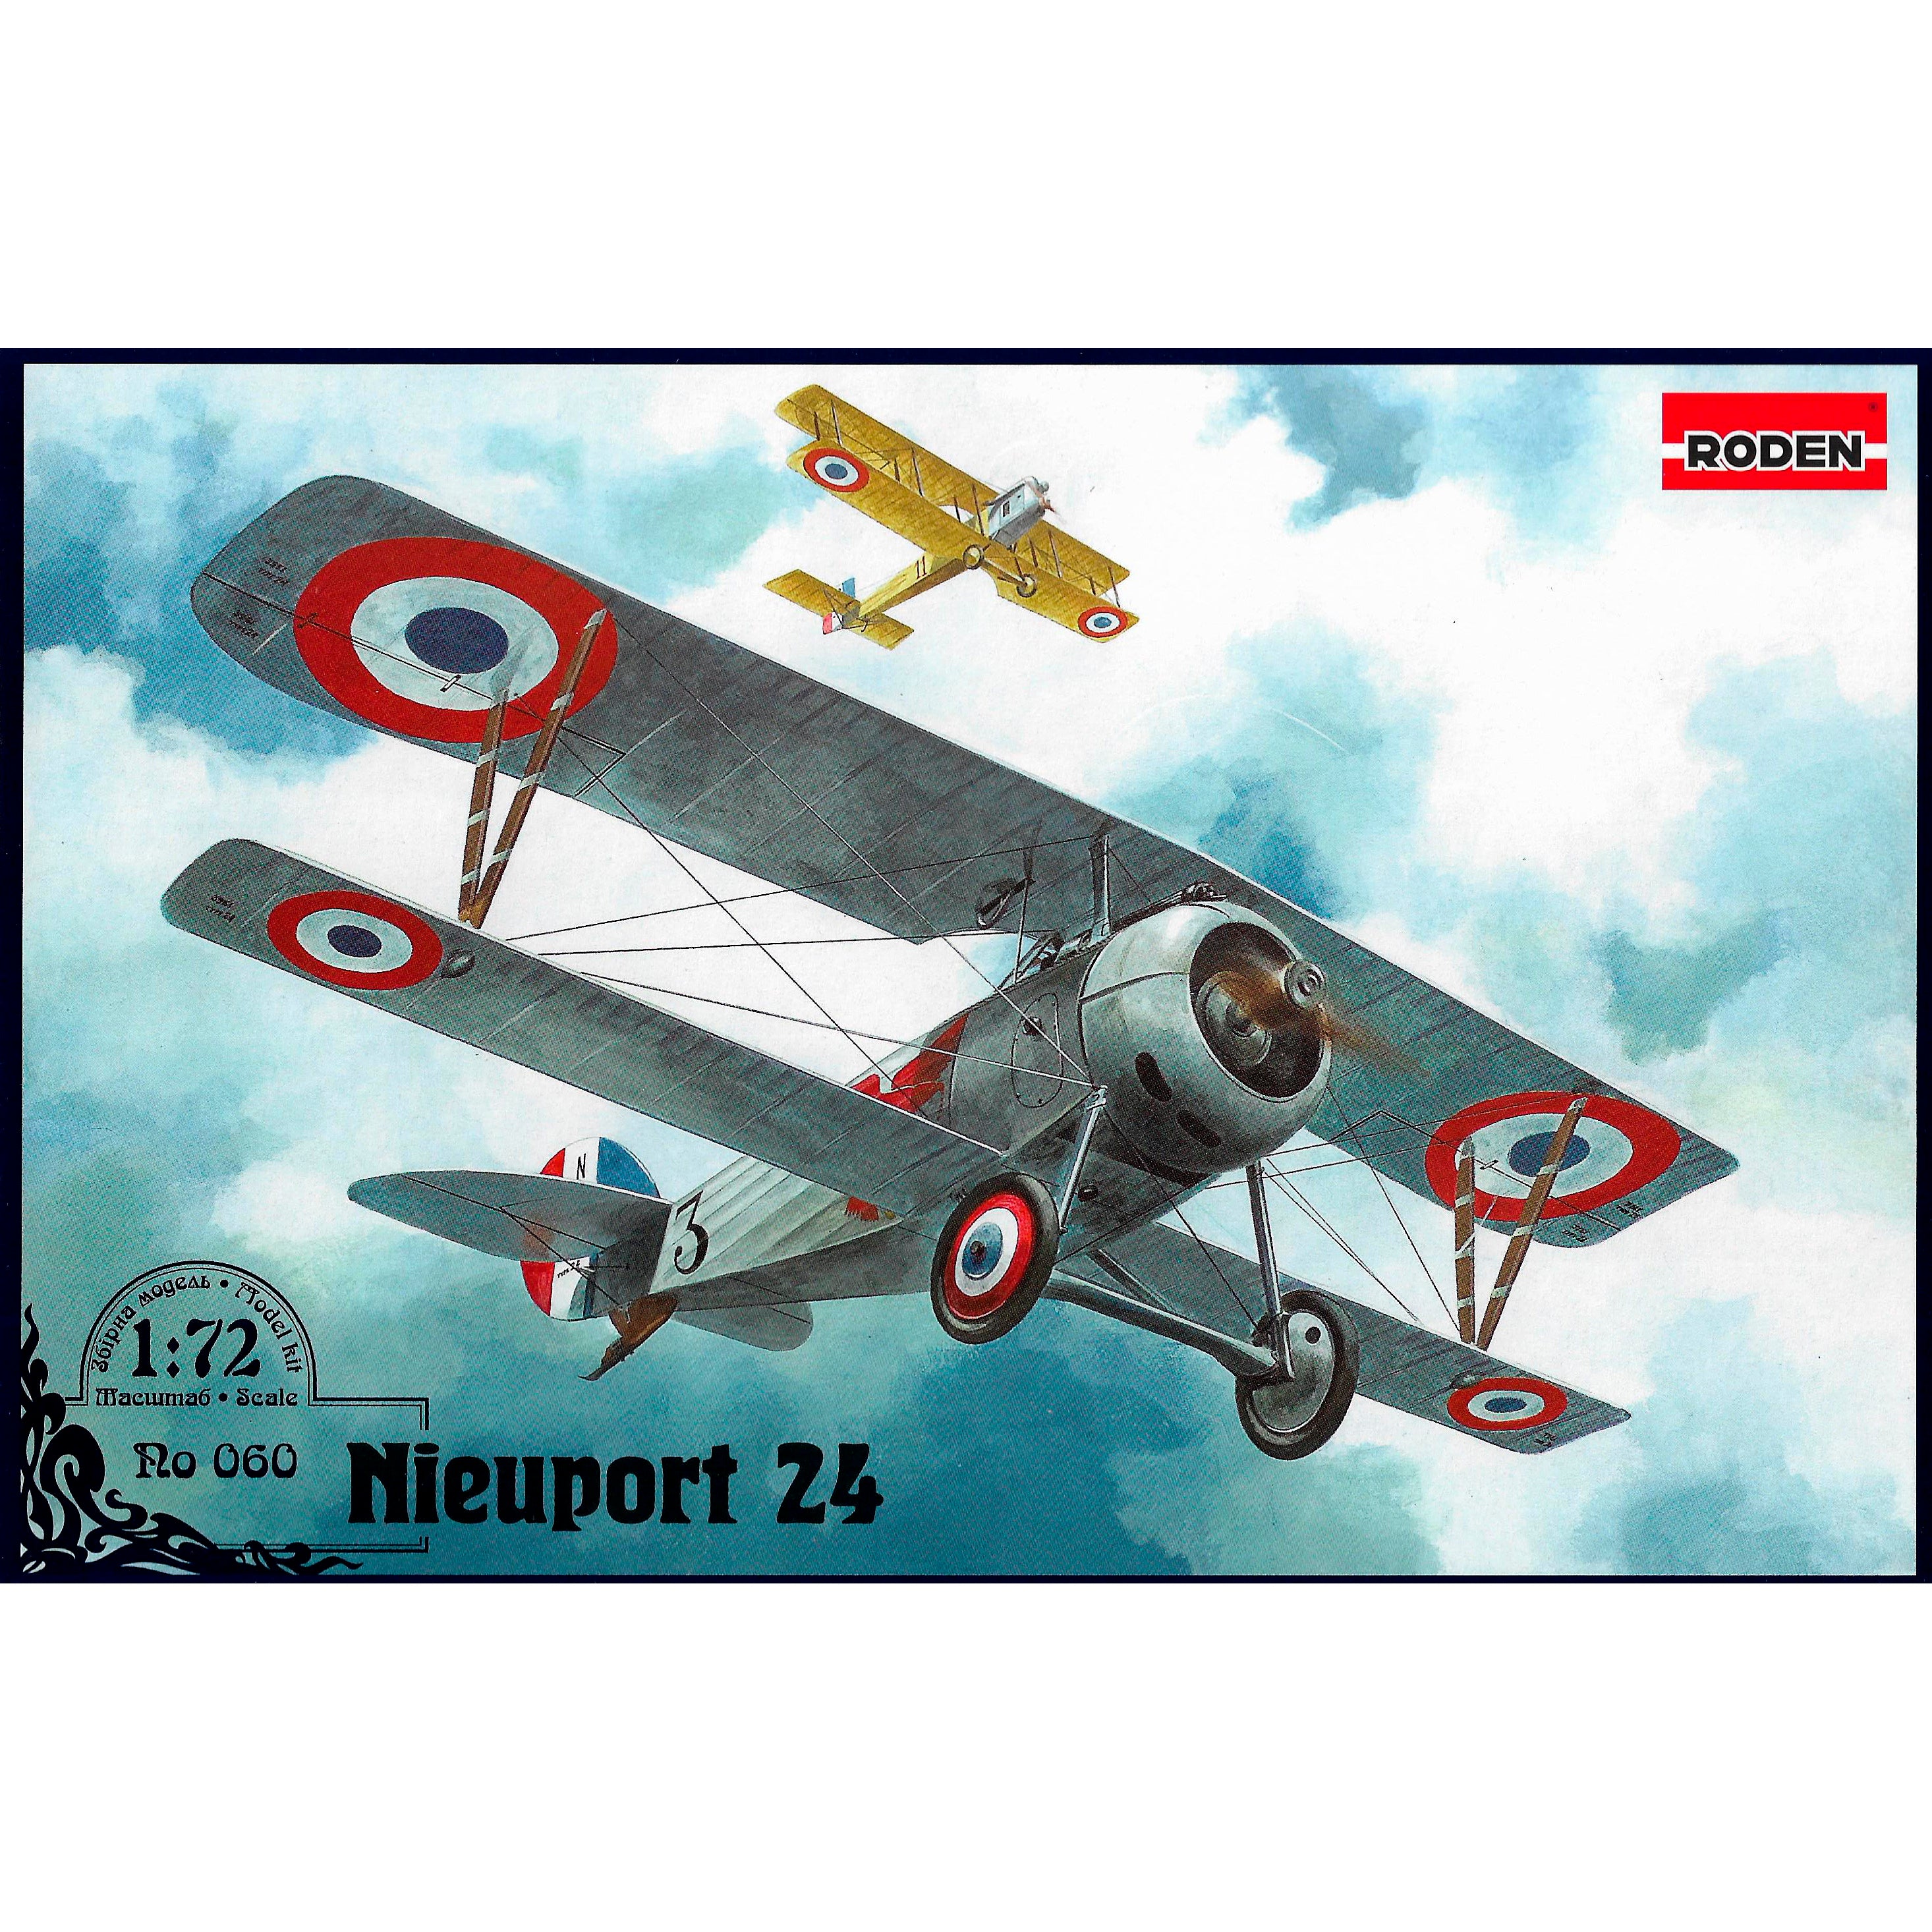 Roden 60 Nieuport 24 WWI Biplane 1/72 Scale Model Kit